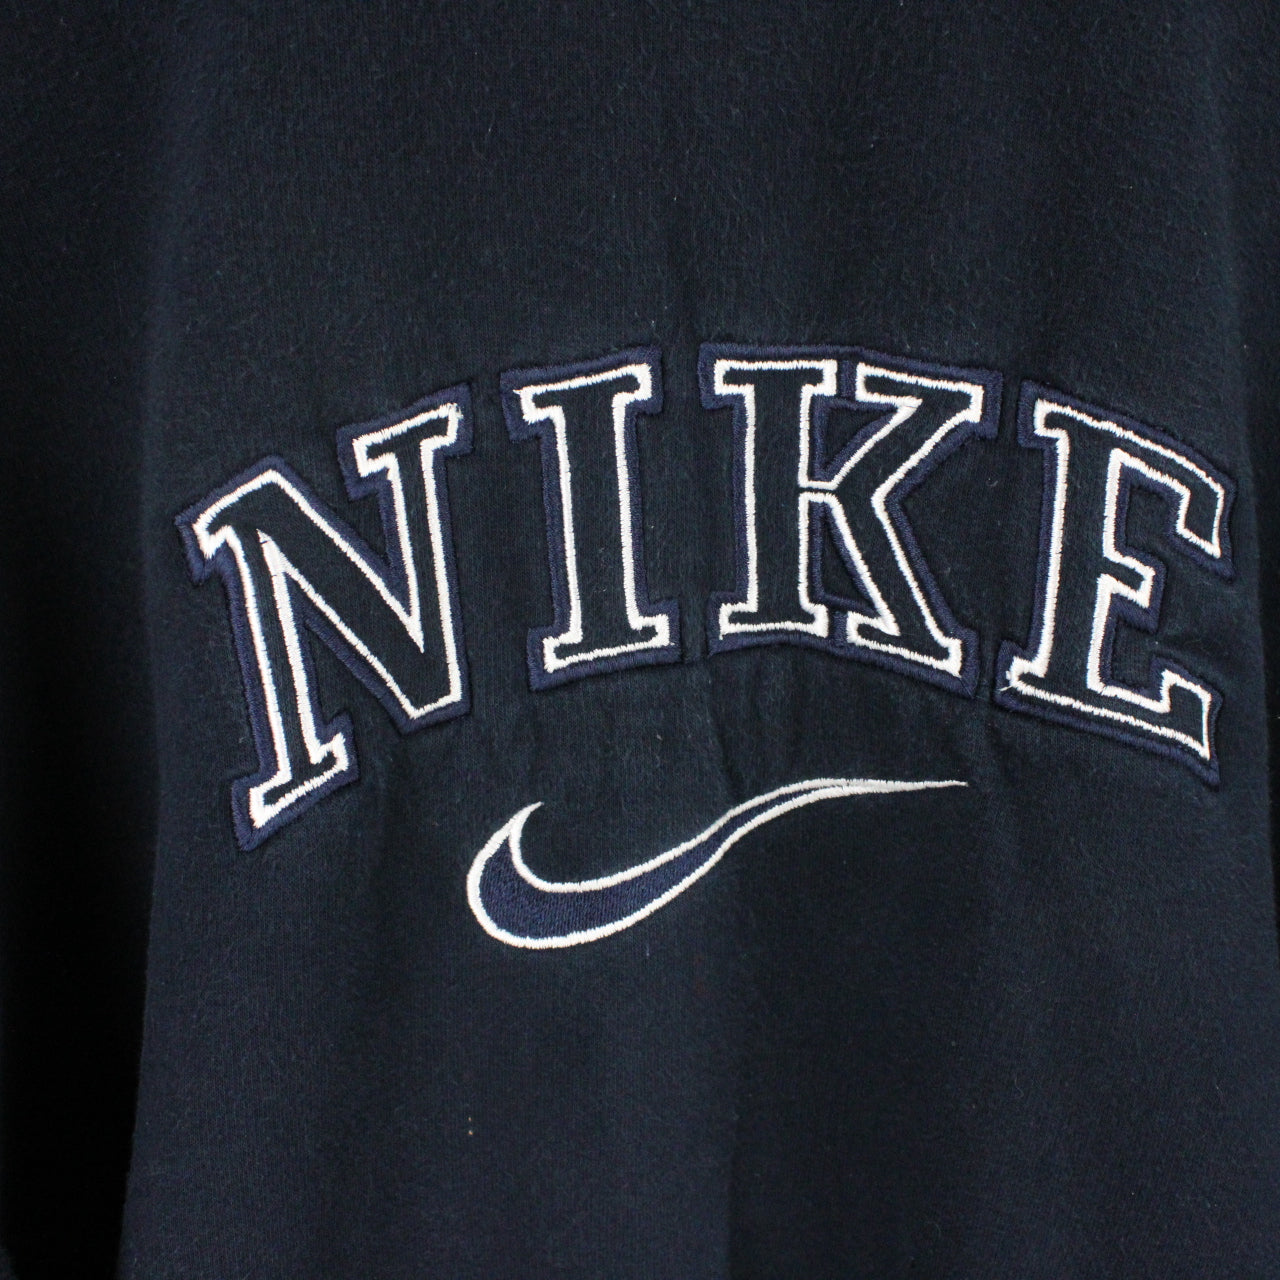 Mens NIKE 90s Sweatshirt Navy Blue | XXL